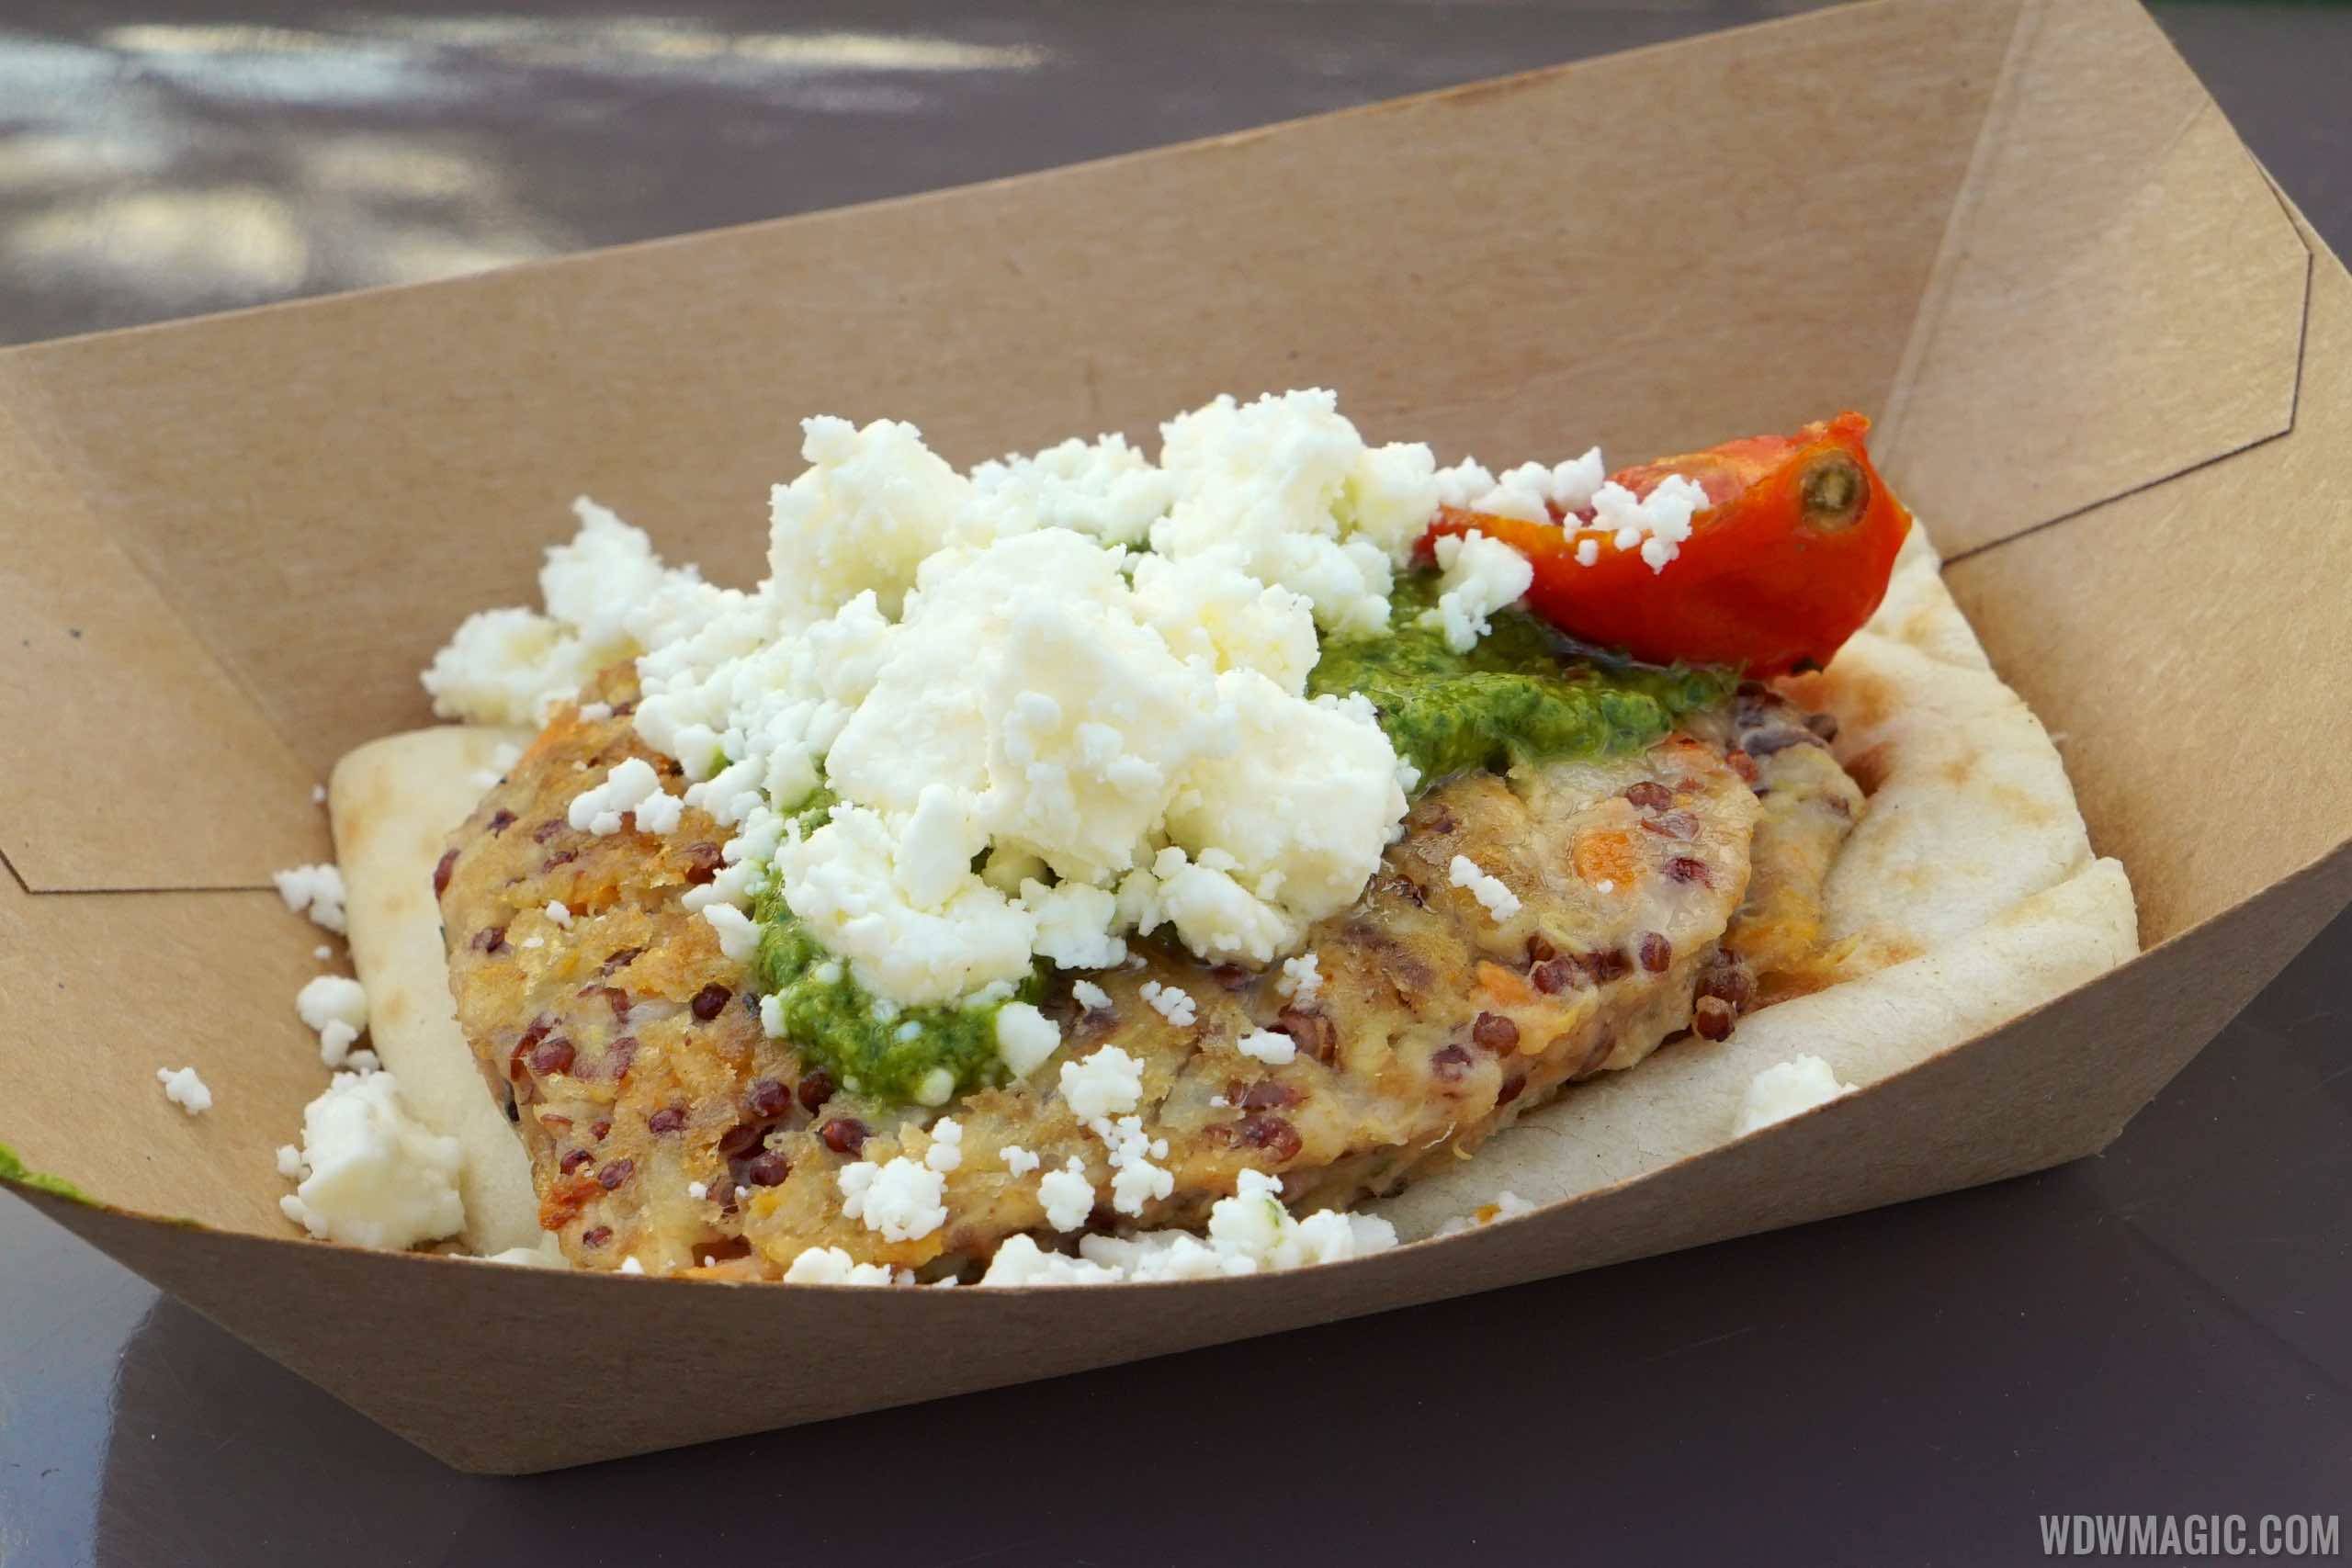 2015 Epcot Flower and Garden Festival Outdoor Kitchen - Urban Farm Eats - Quinoa Vegetable Naanwich $4.25